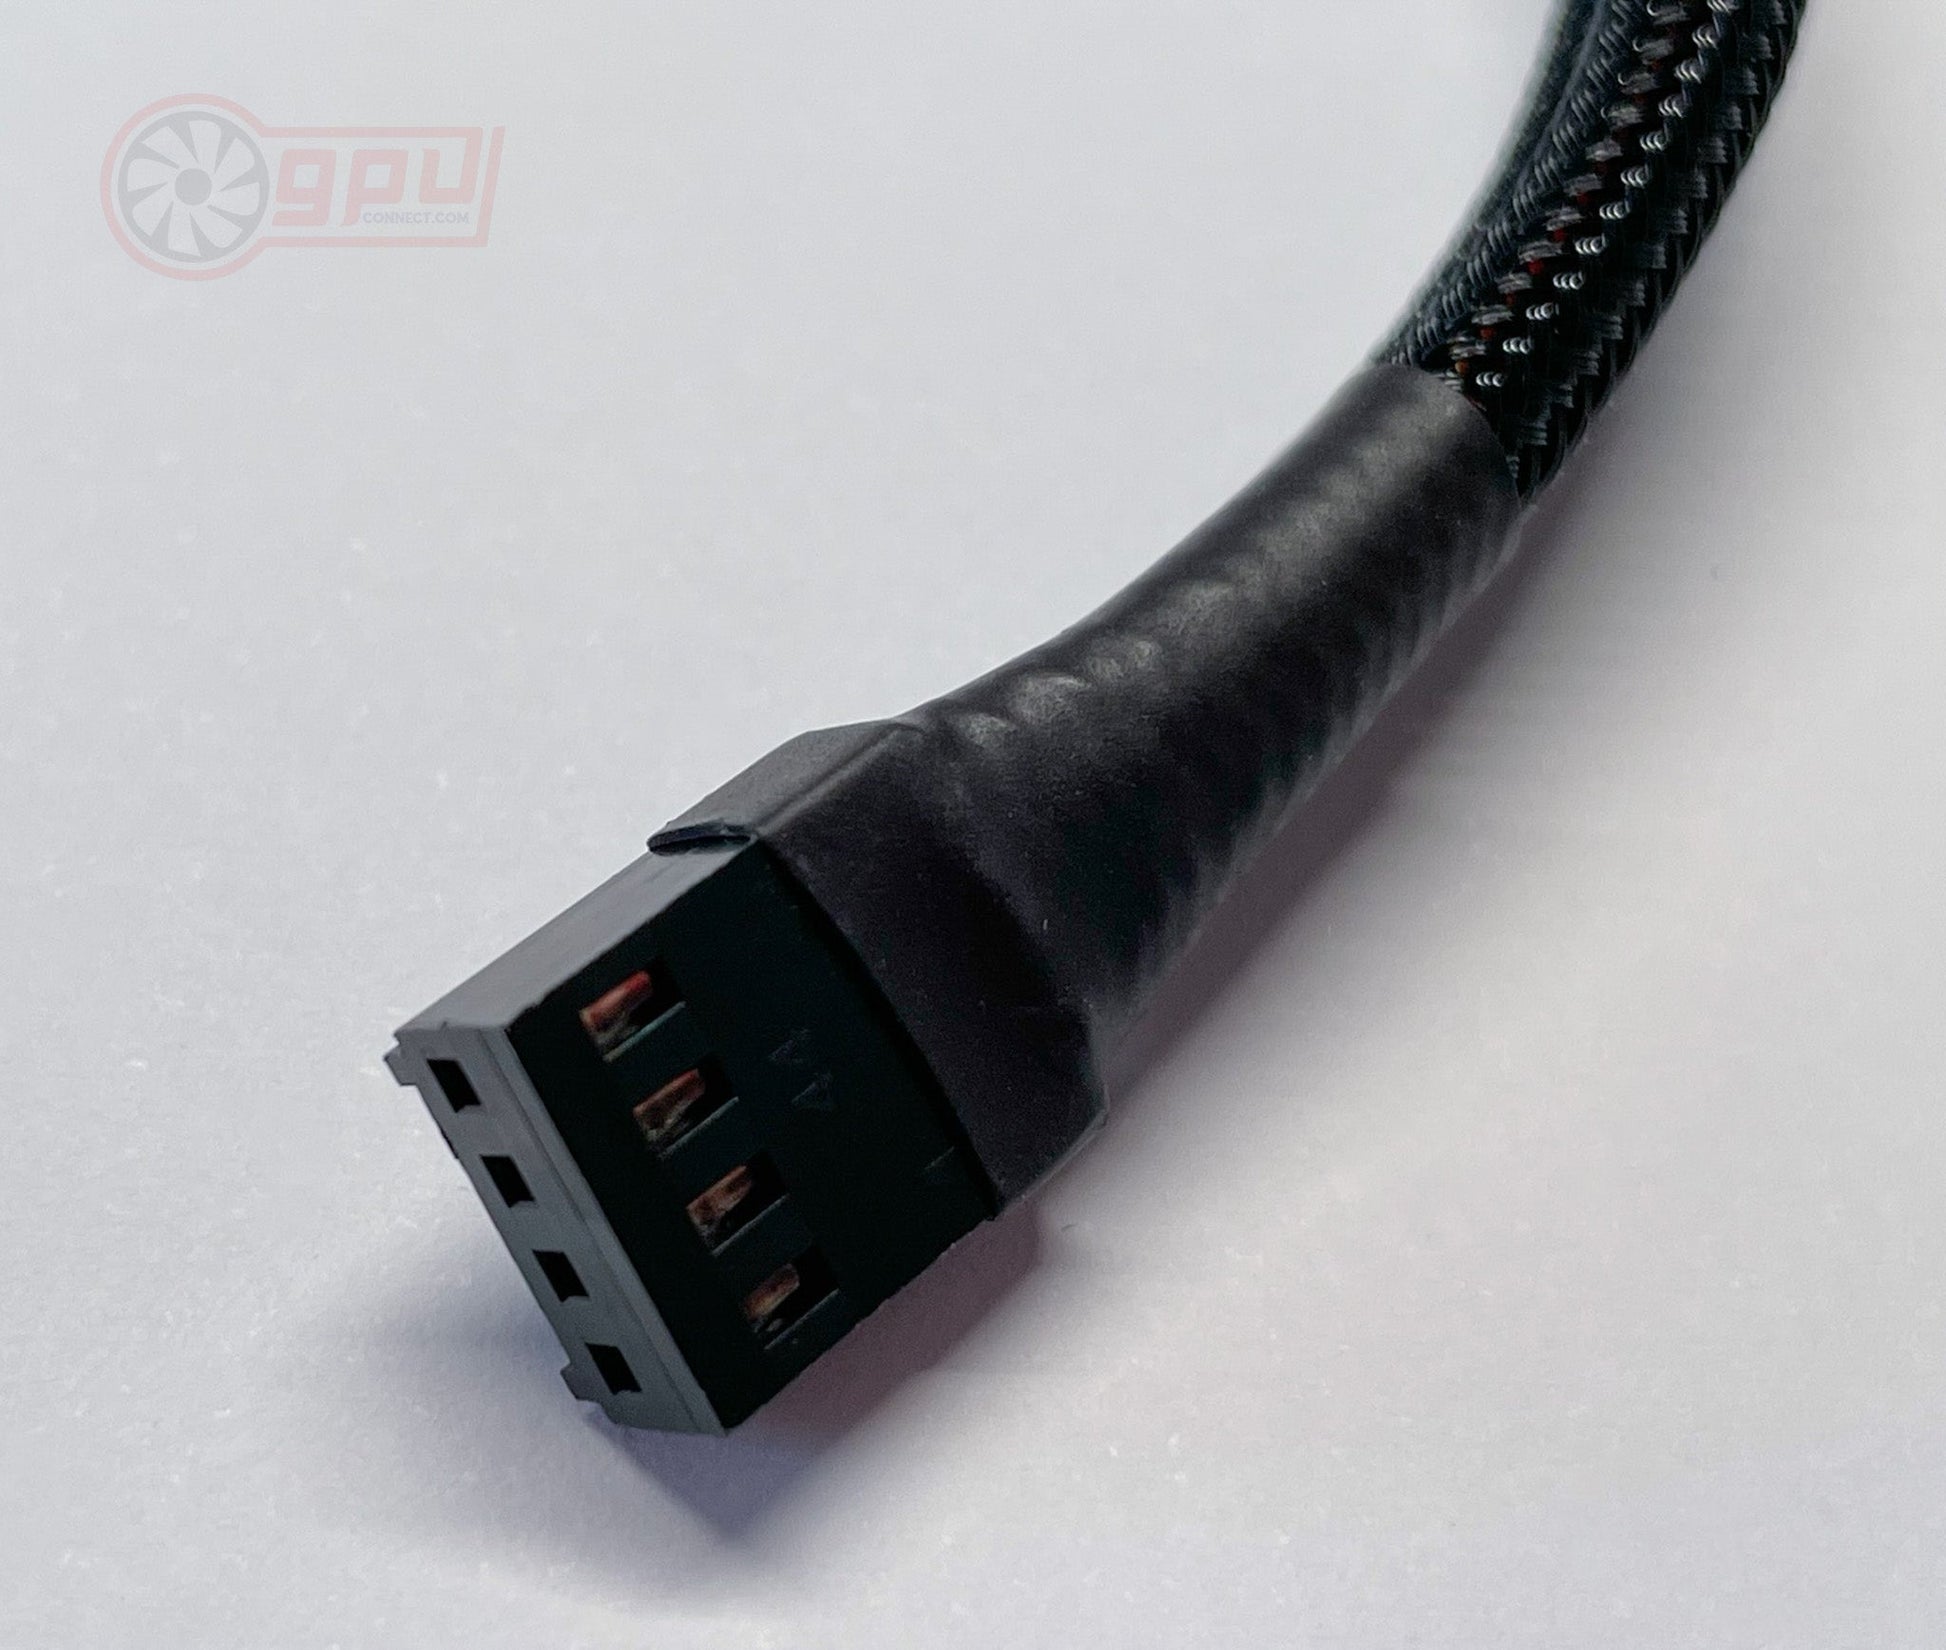 PREMIUM 4 pin PWM Fan Y Splitter Extension Cable Lead CPU GPU 50cm - GPUCONNECT.COM